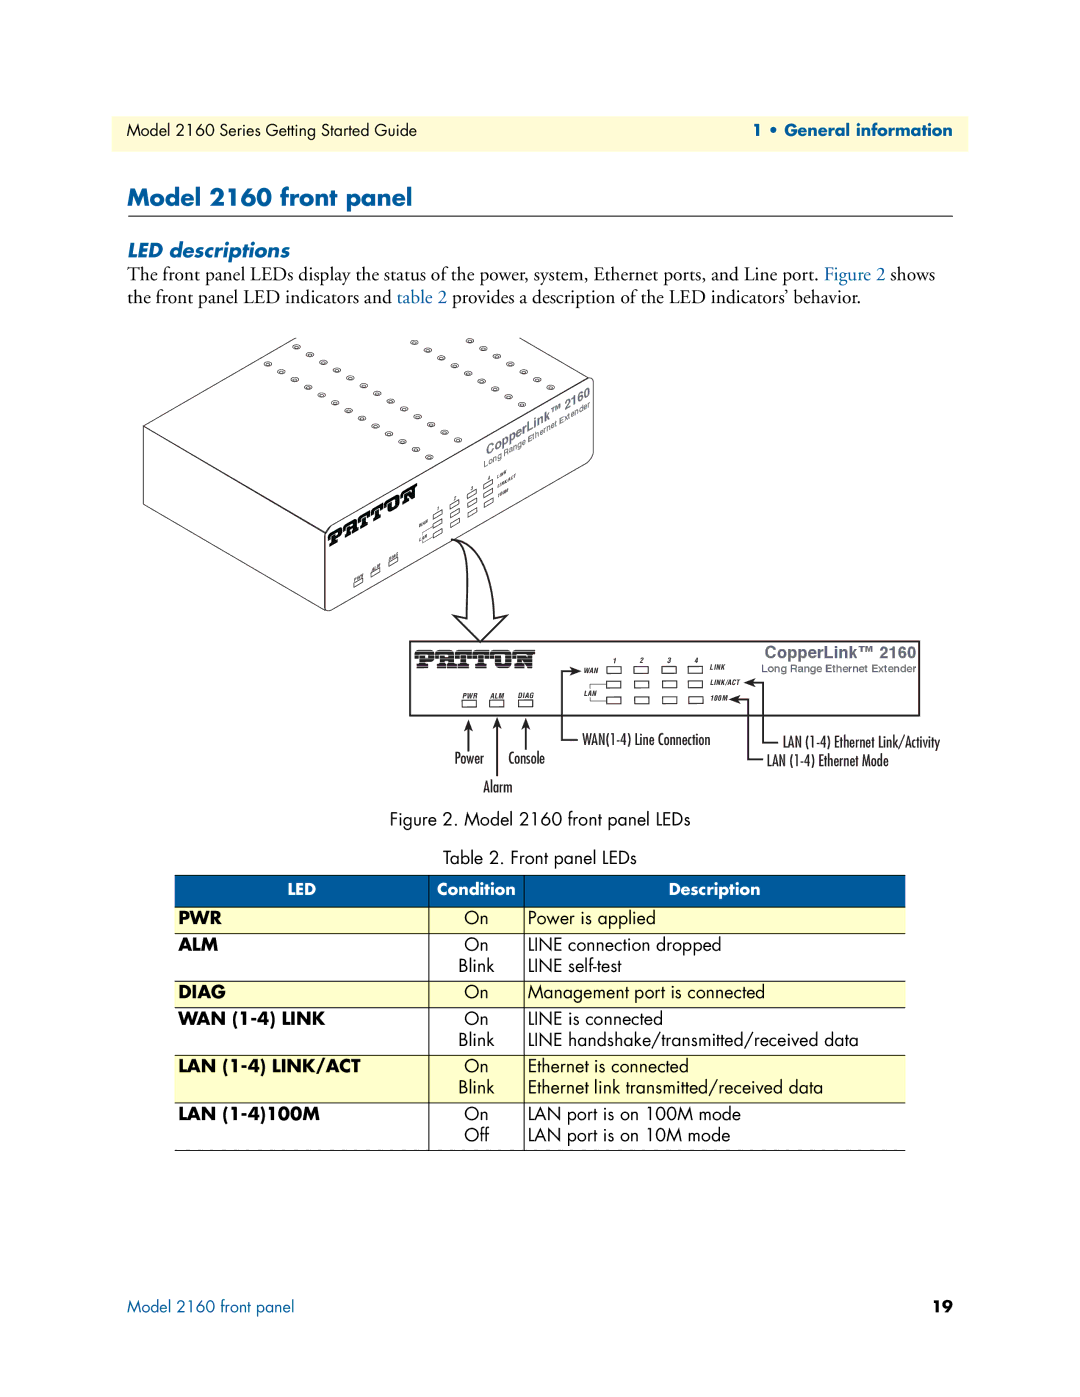 Patton electronic 07M2160-GS, 2160 Series manual Model 2160 front panel, LED descriptions, WAN 1-4 Link, LAN 1-4100M 